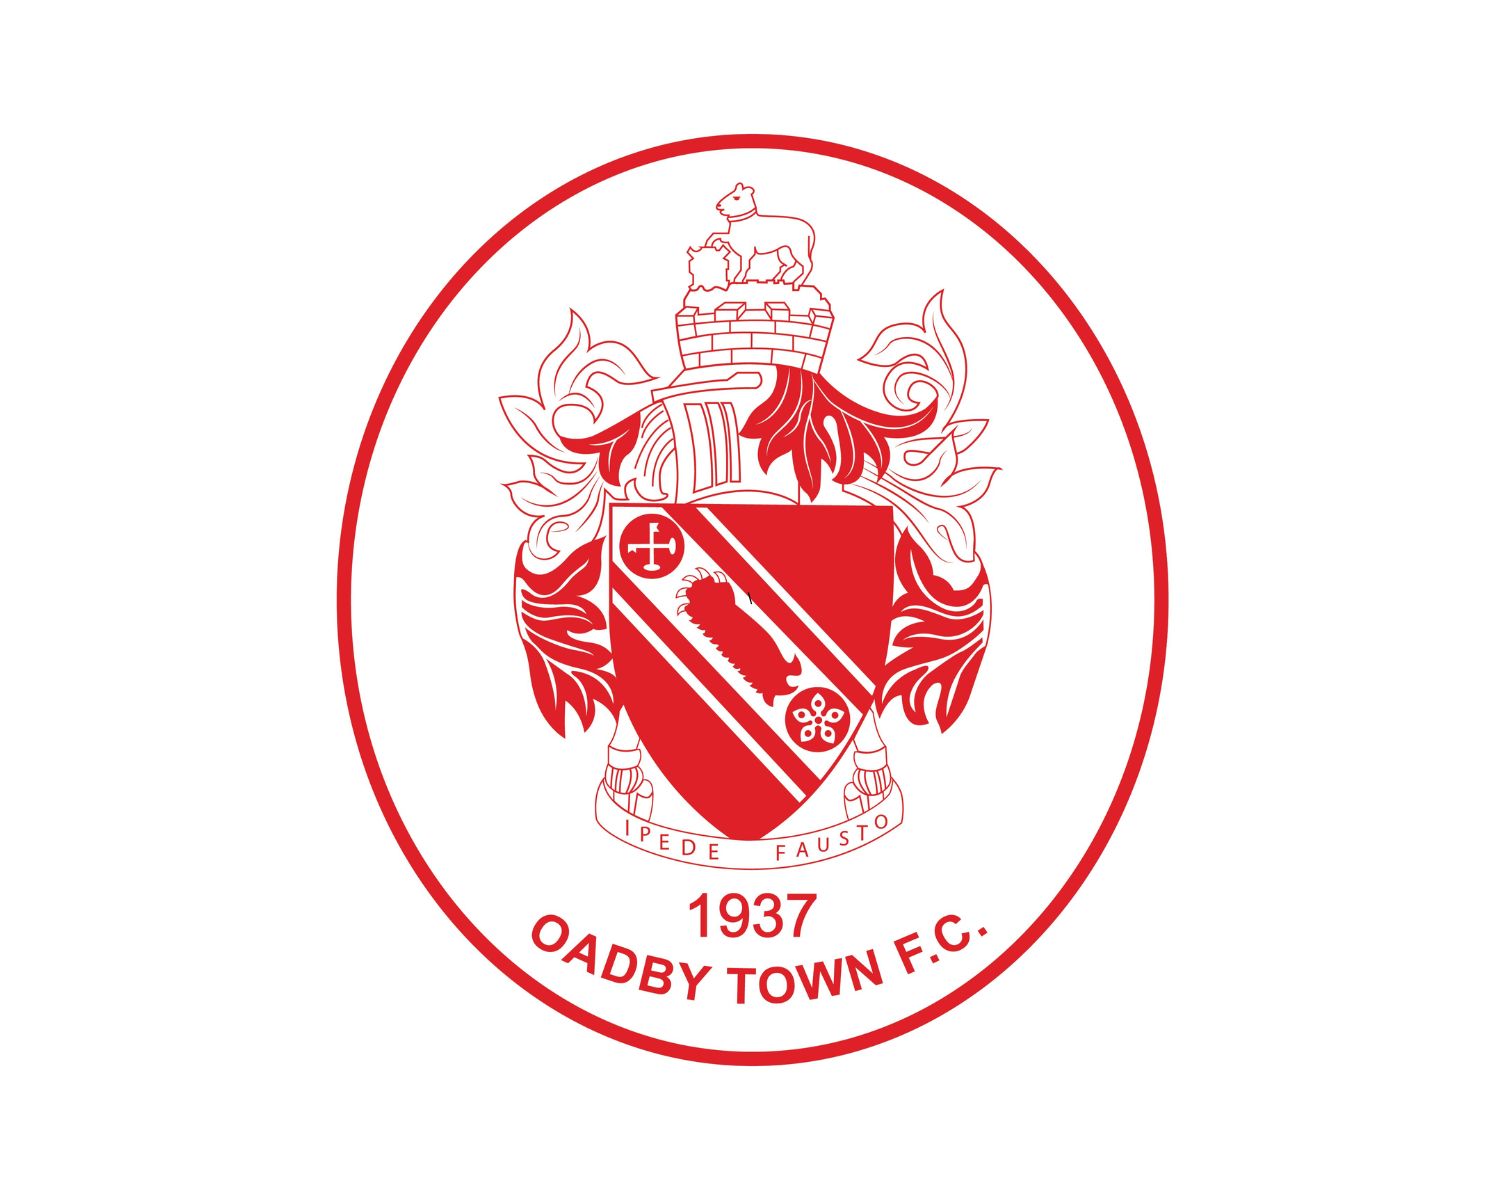 oadby-town-fc-14-football-club-facts